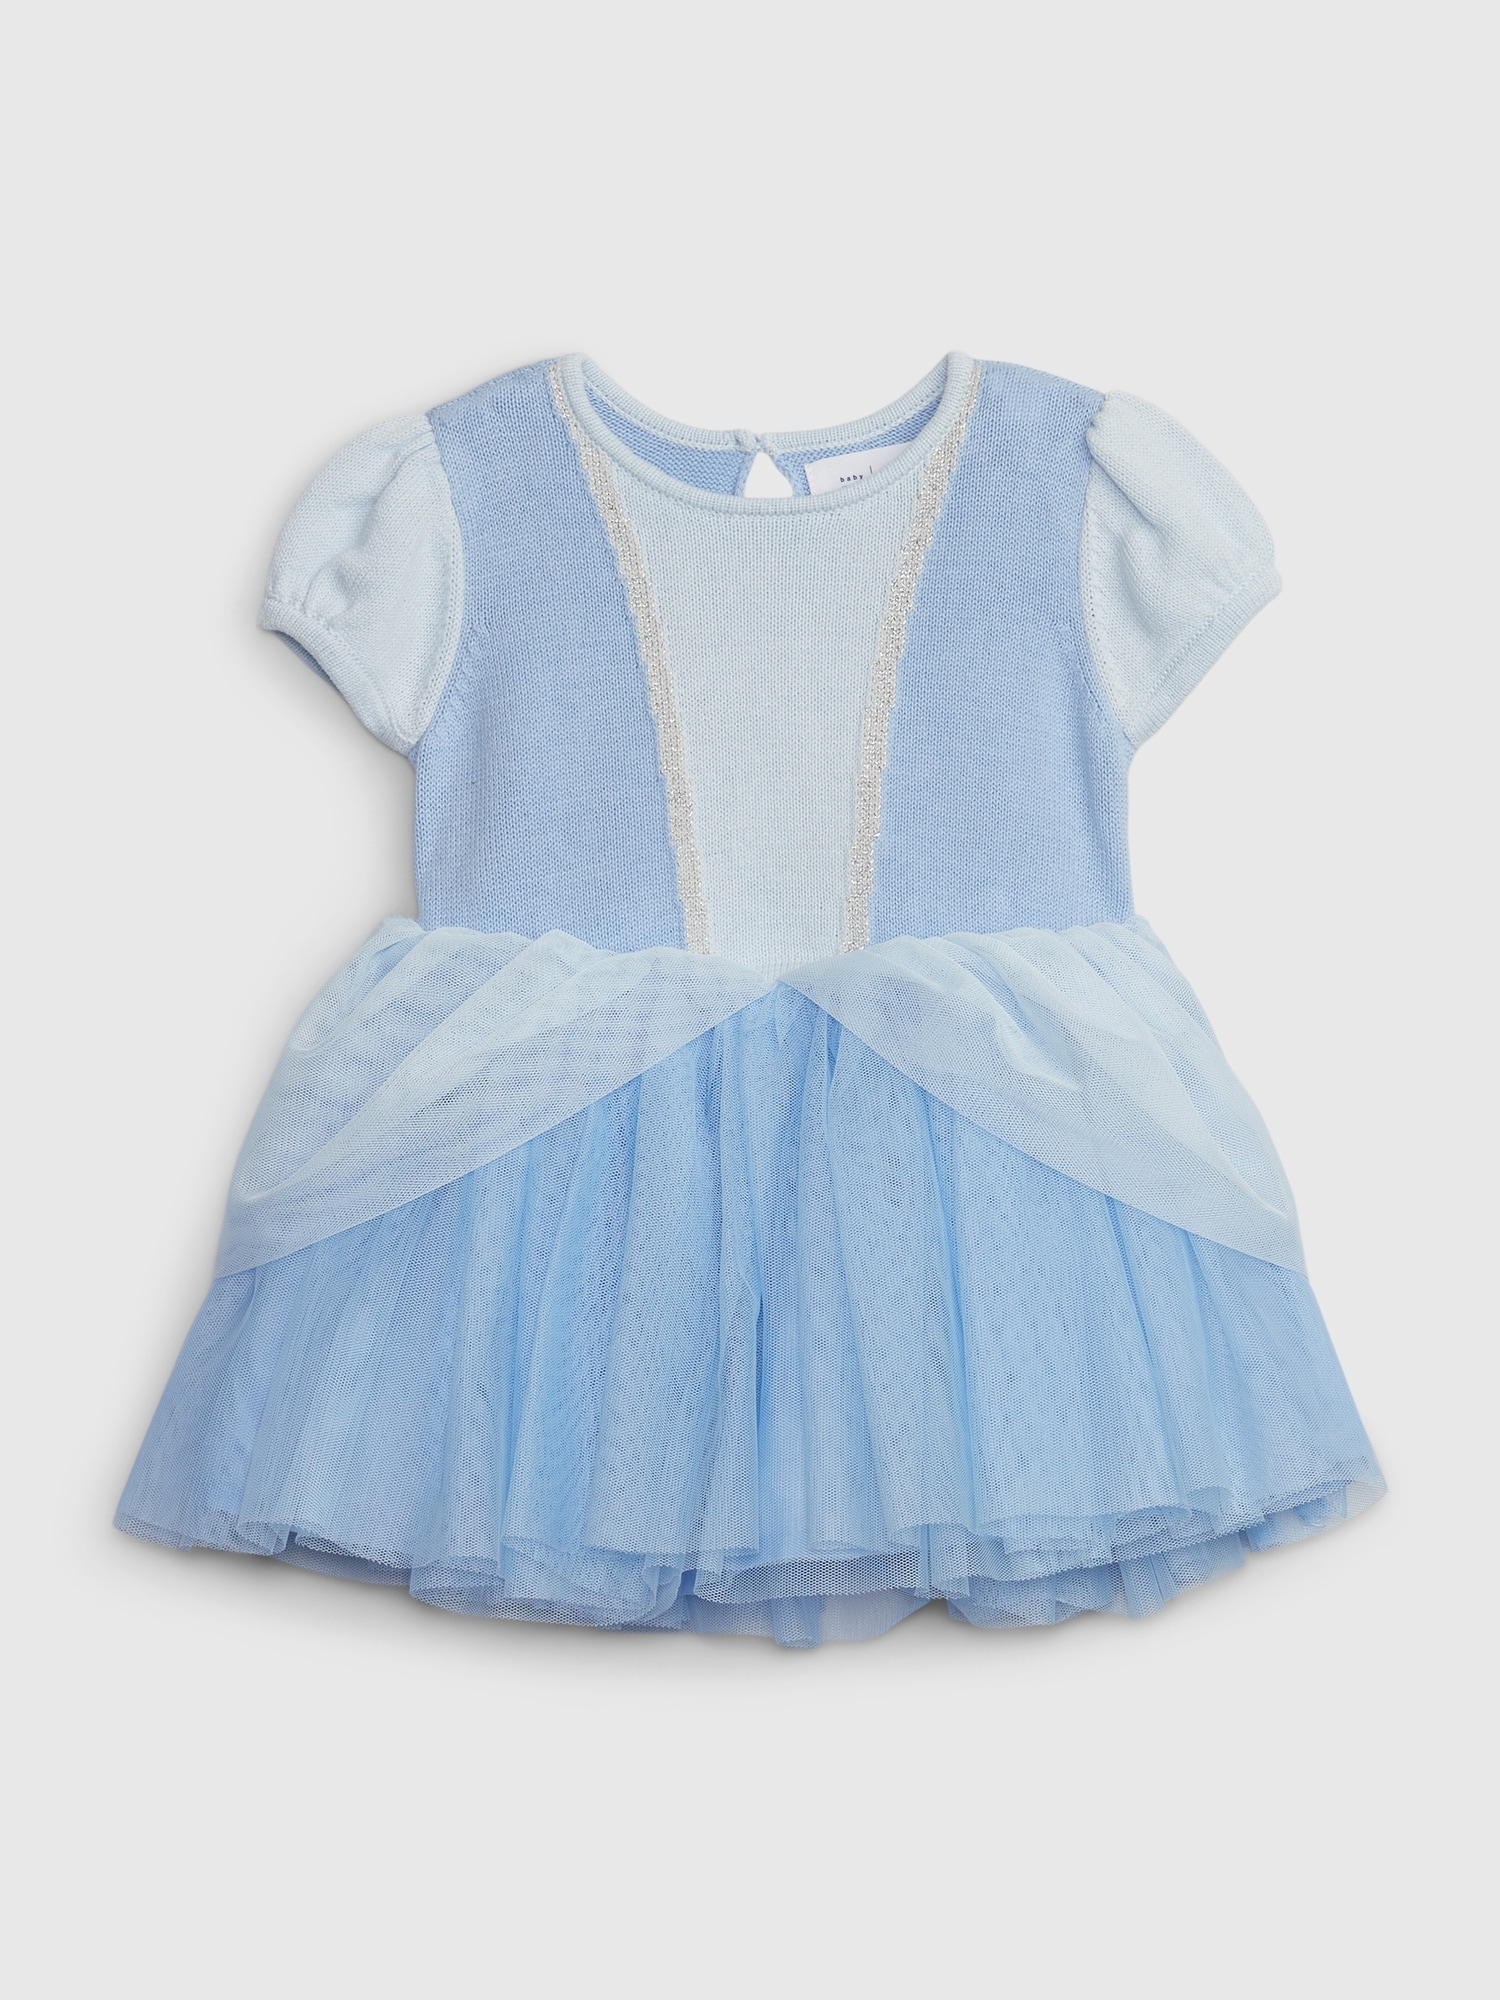 Disney dreamy collection: Cinderella carriage Dress | Hana Castle store